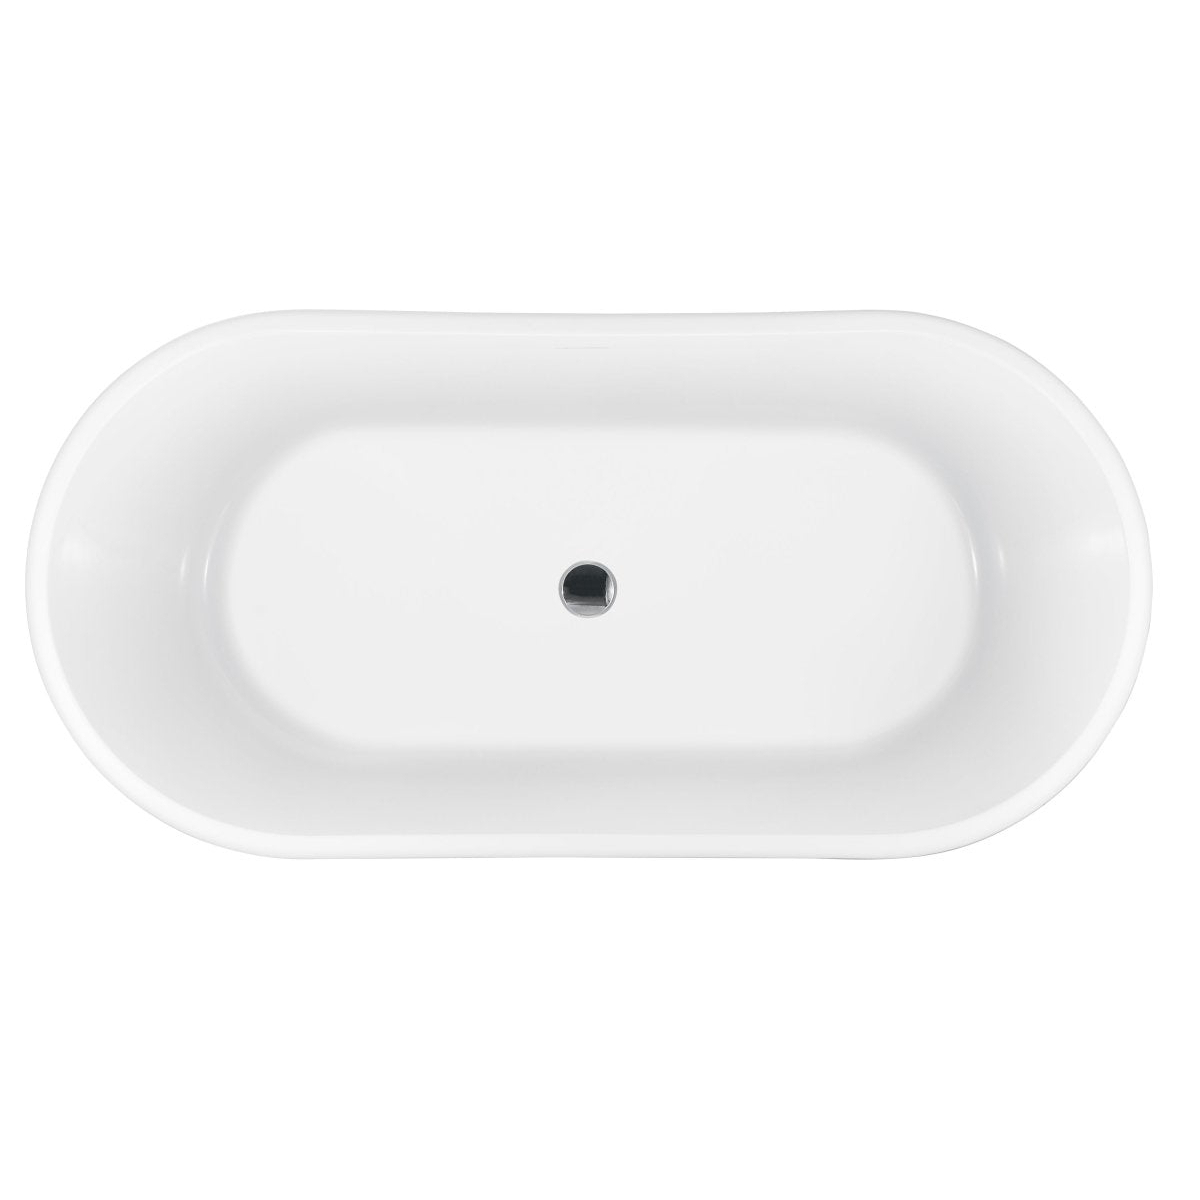 ExBrite 54 Inch Bathtub Anti-slip Acrylic Freestanding Soaking White